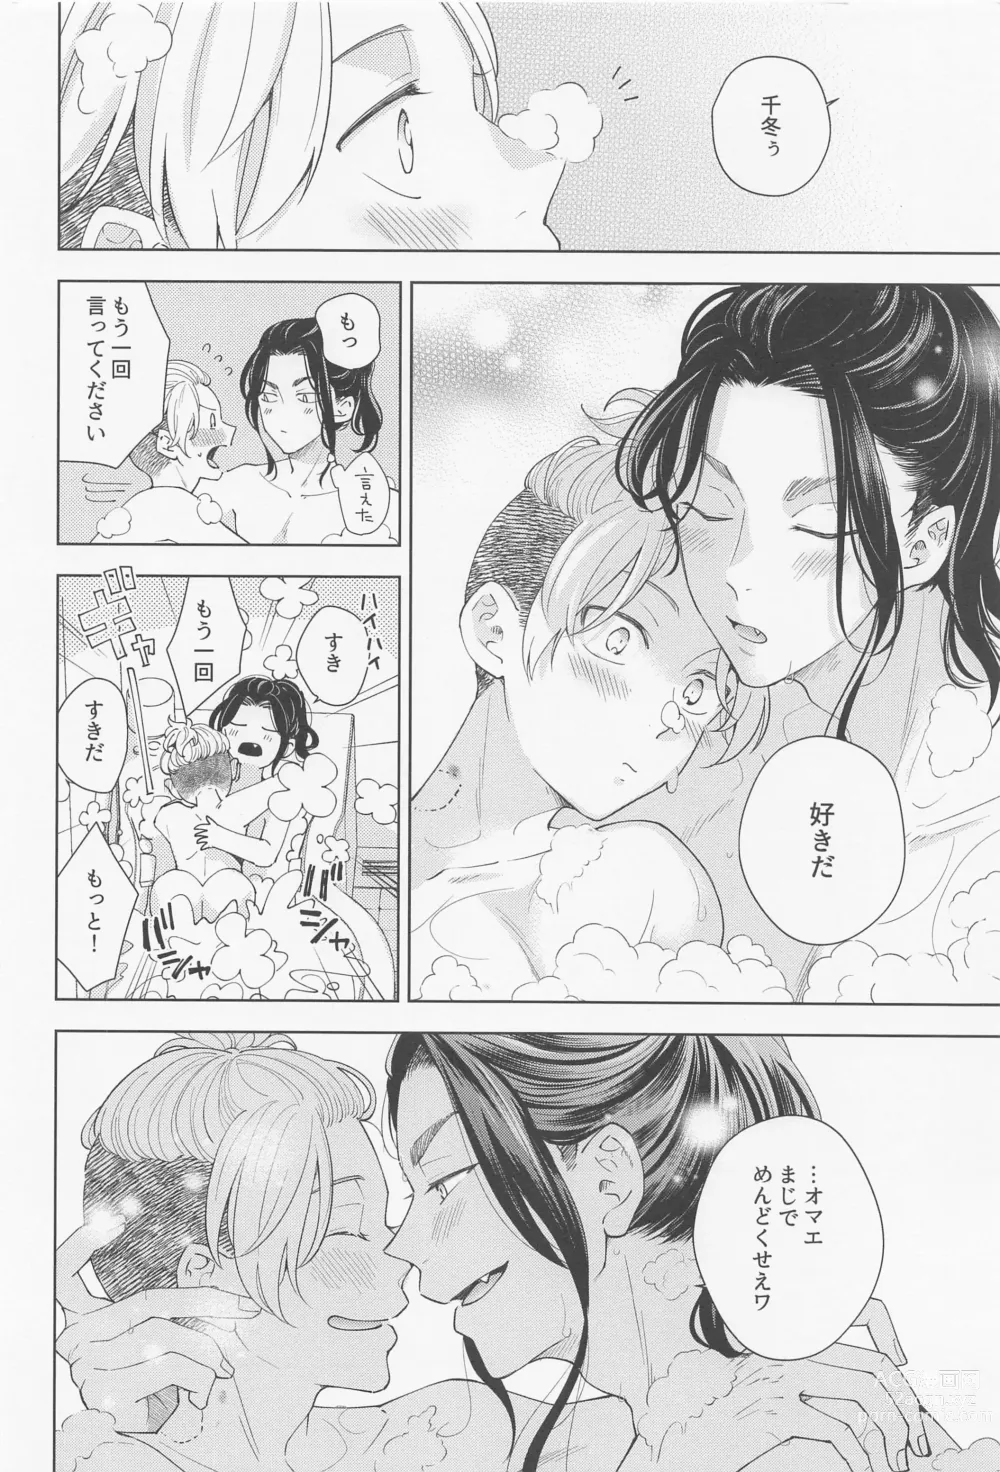 Page 63 of doujinshi Hopeless Romantic